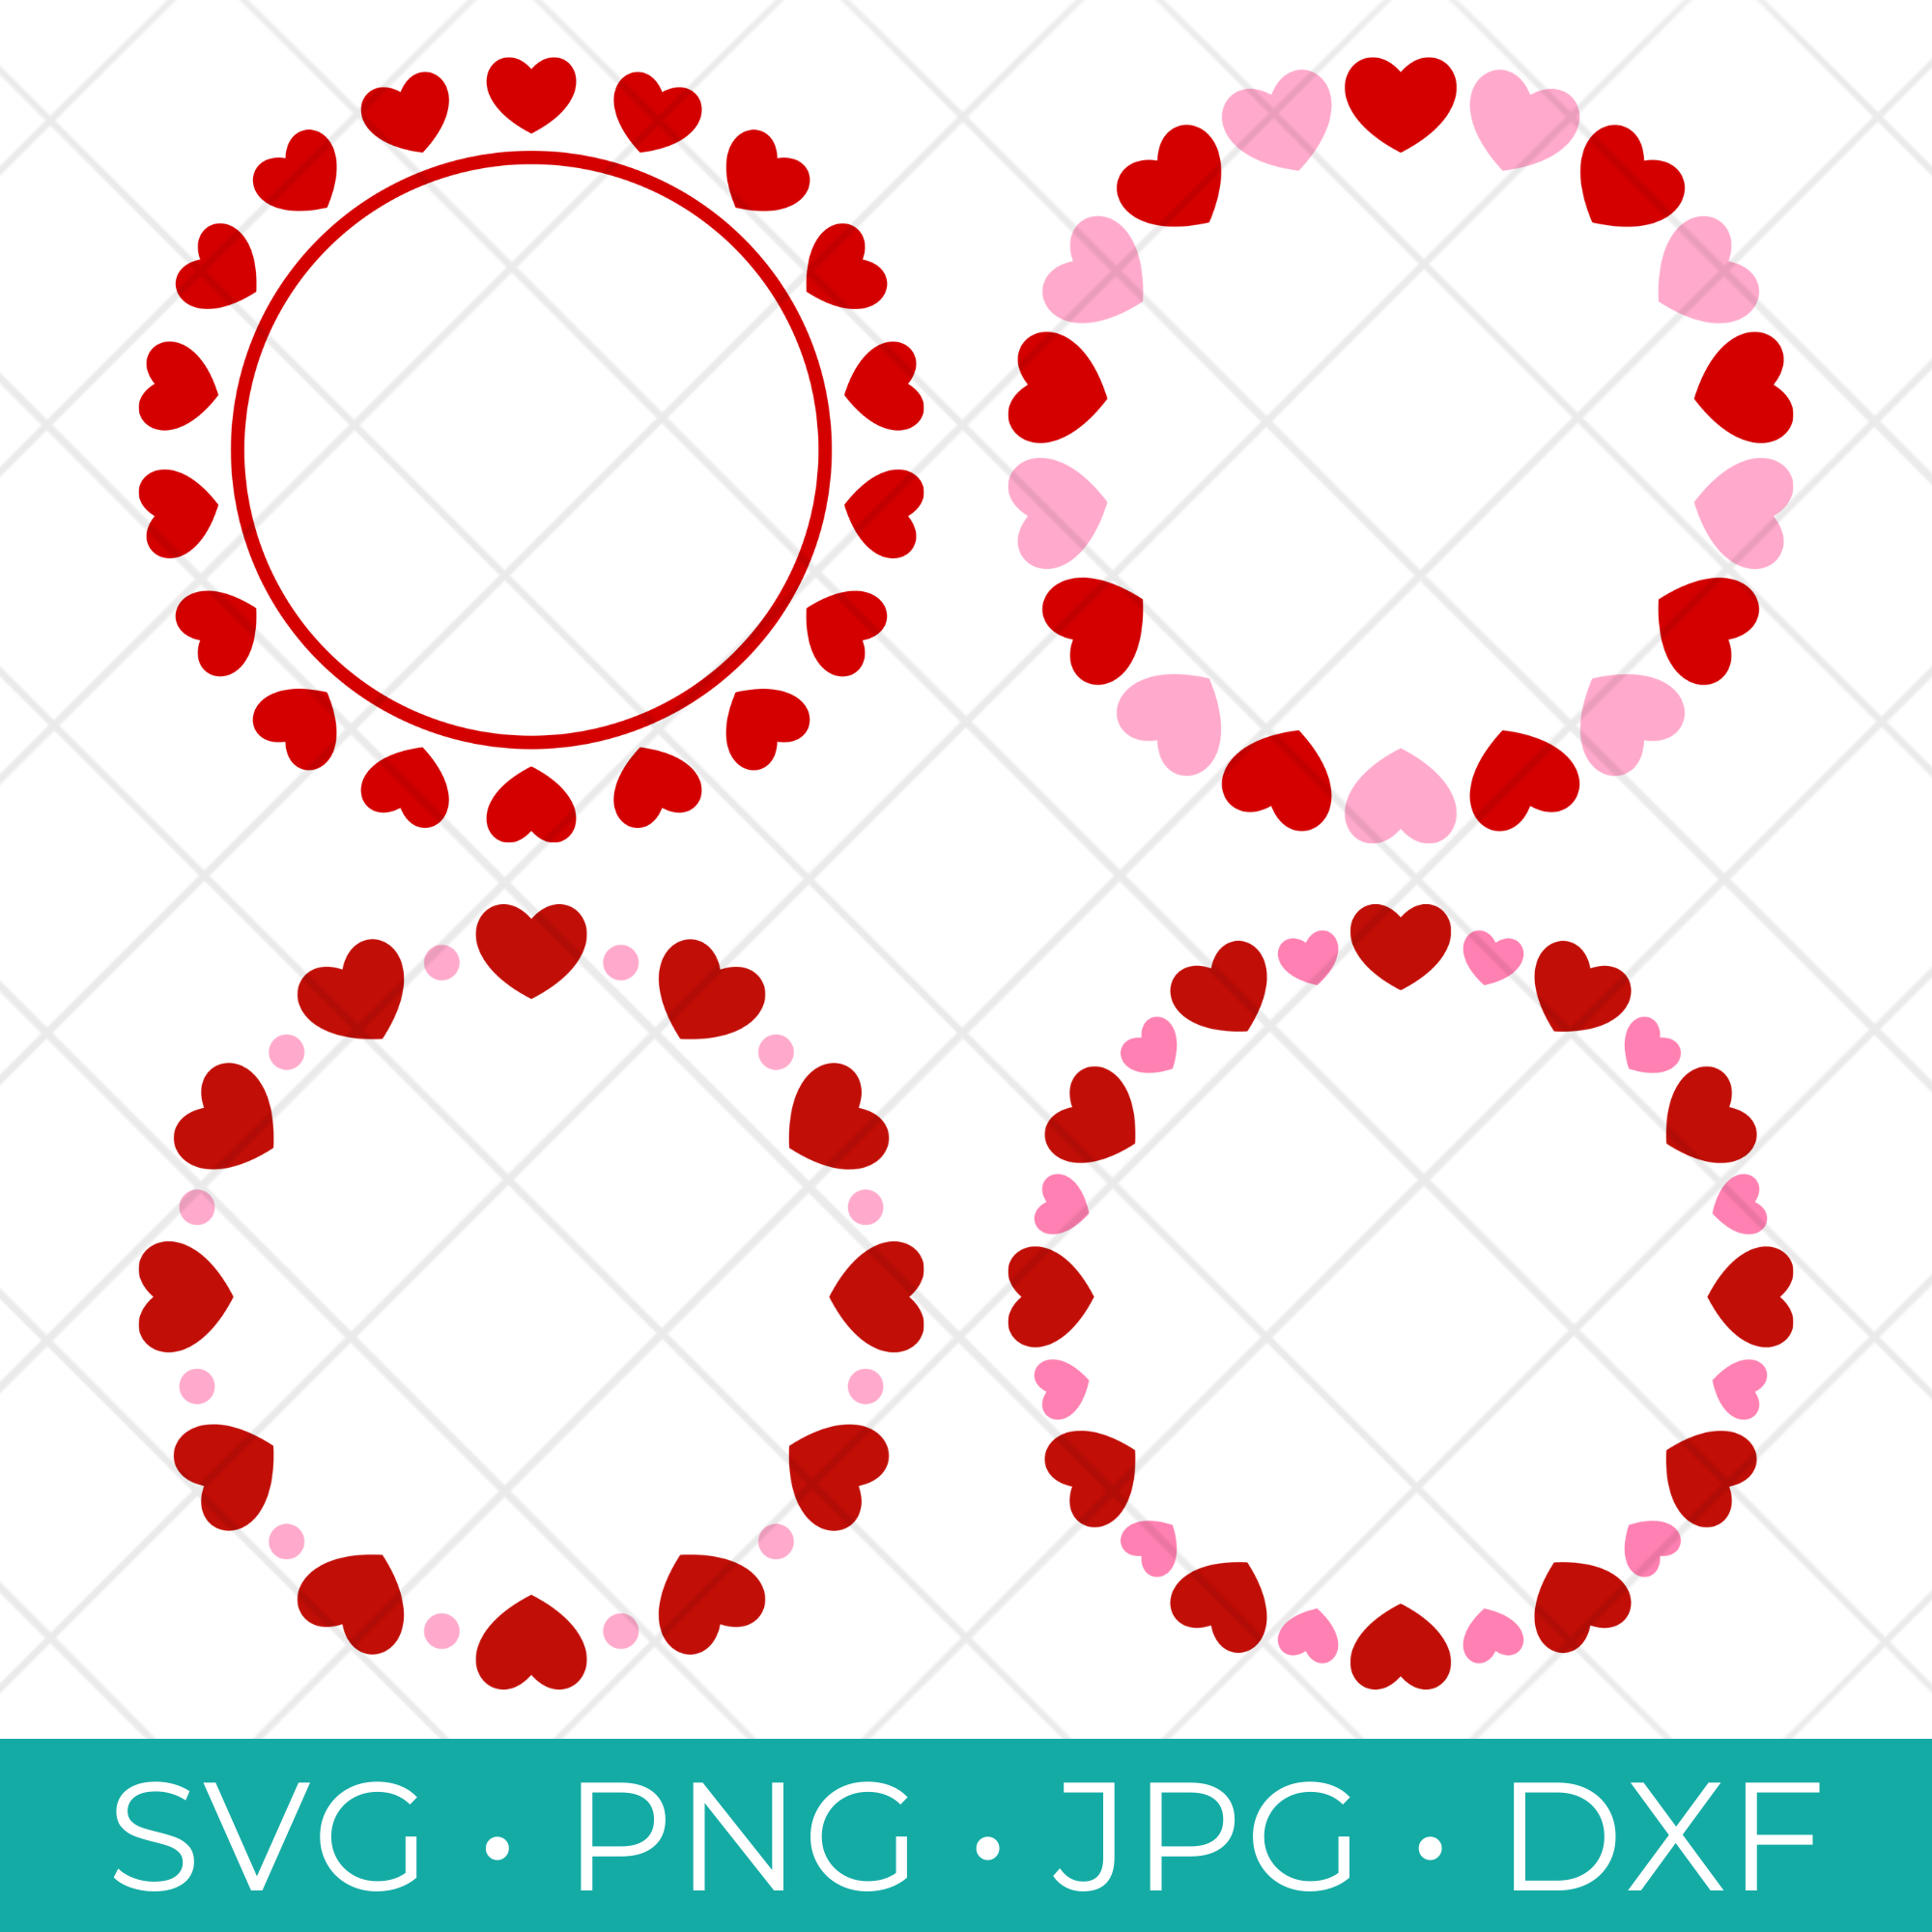 Download the Heart Monogram Frames SVG Cut Files